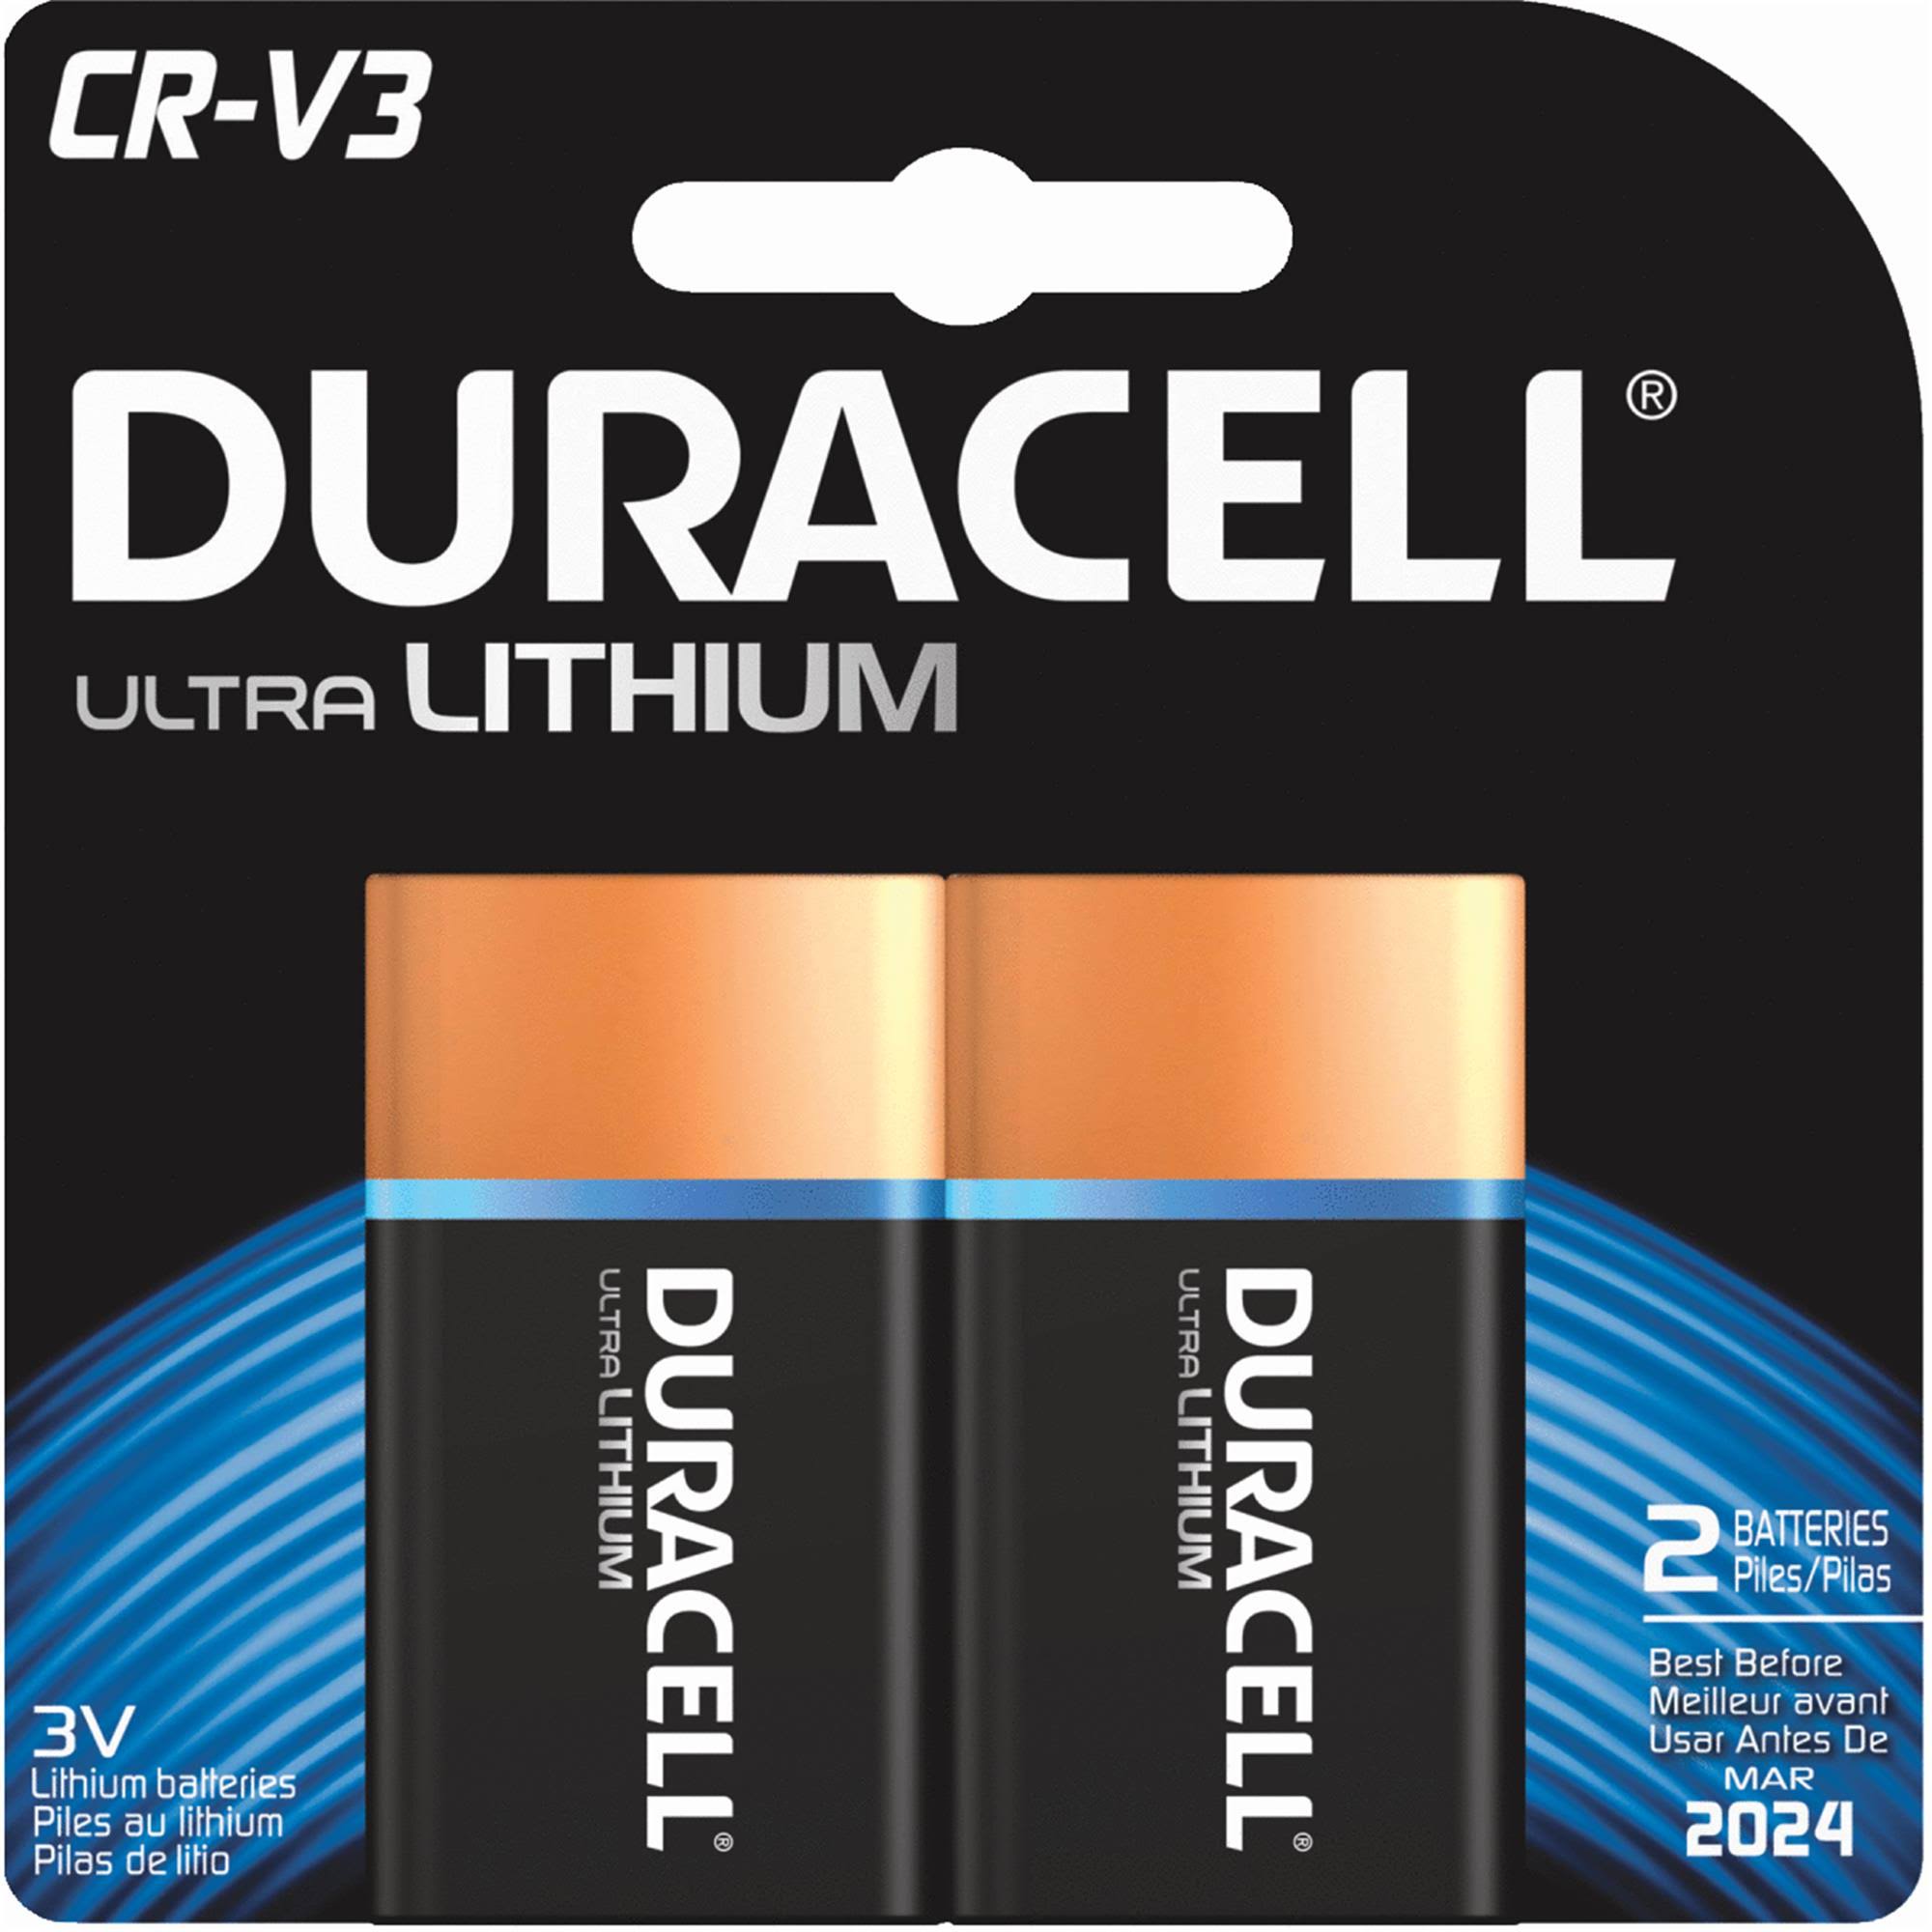 Duracell Ultra CrV3 Digital Camera Battery Batteries - 2ct